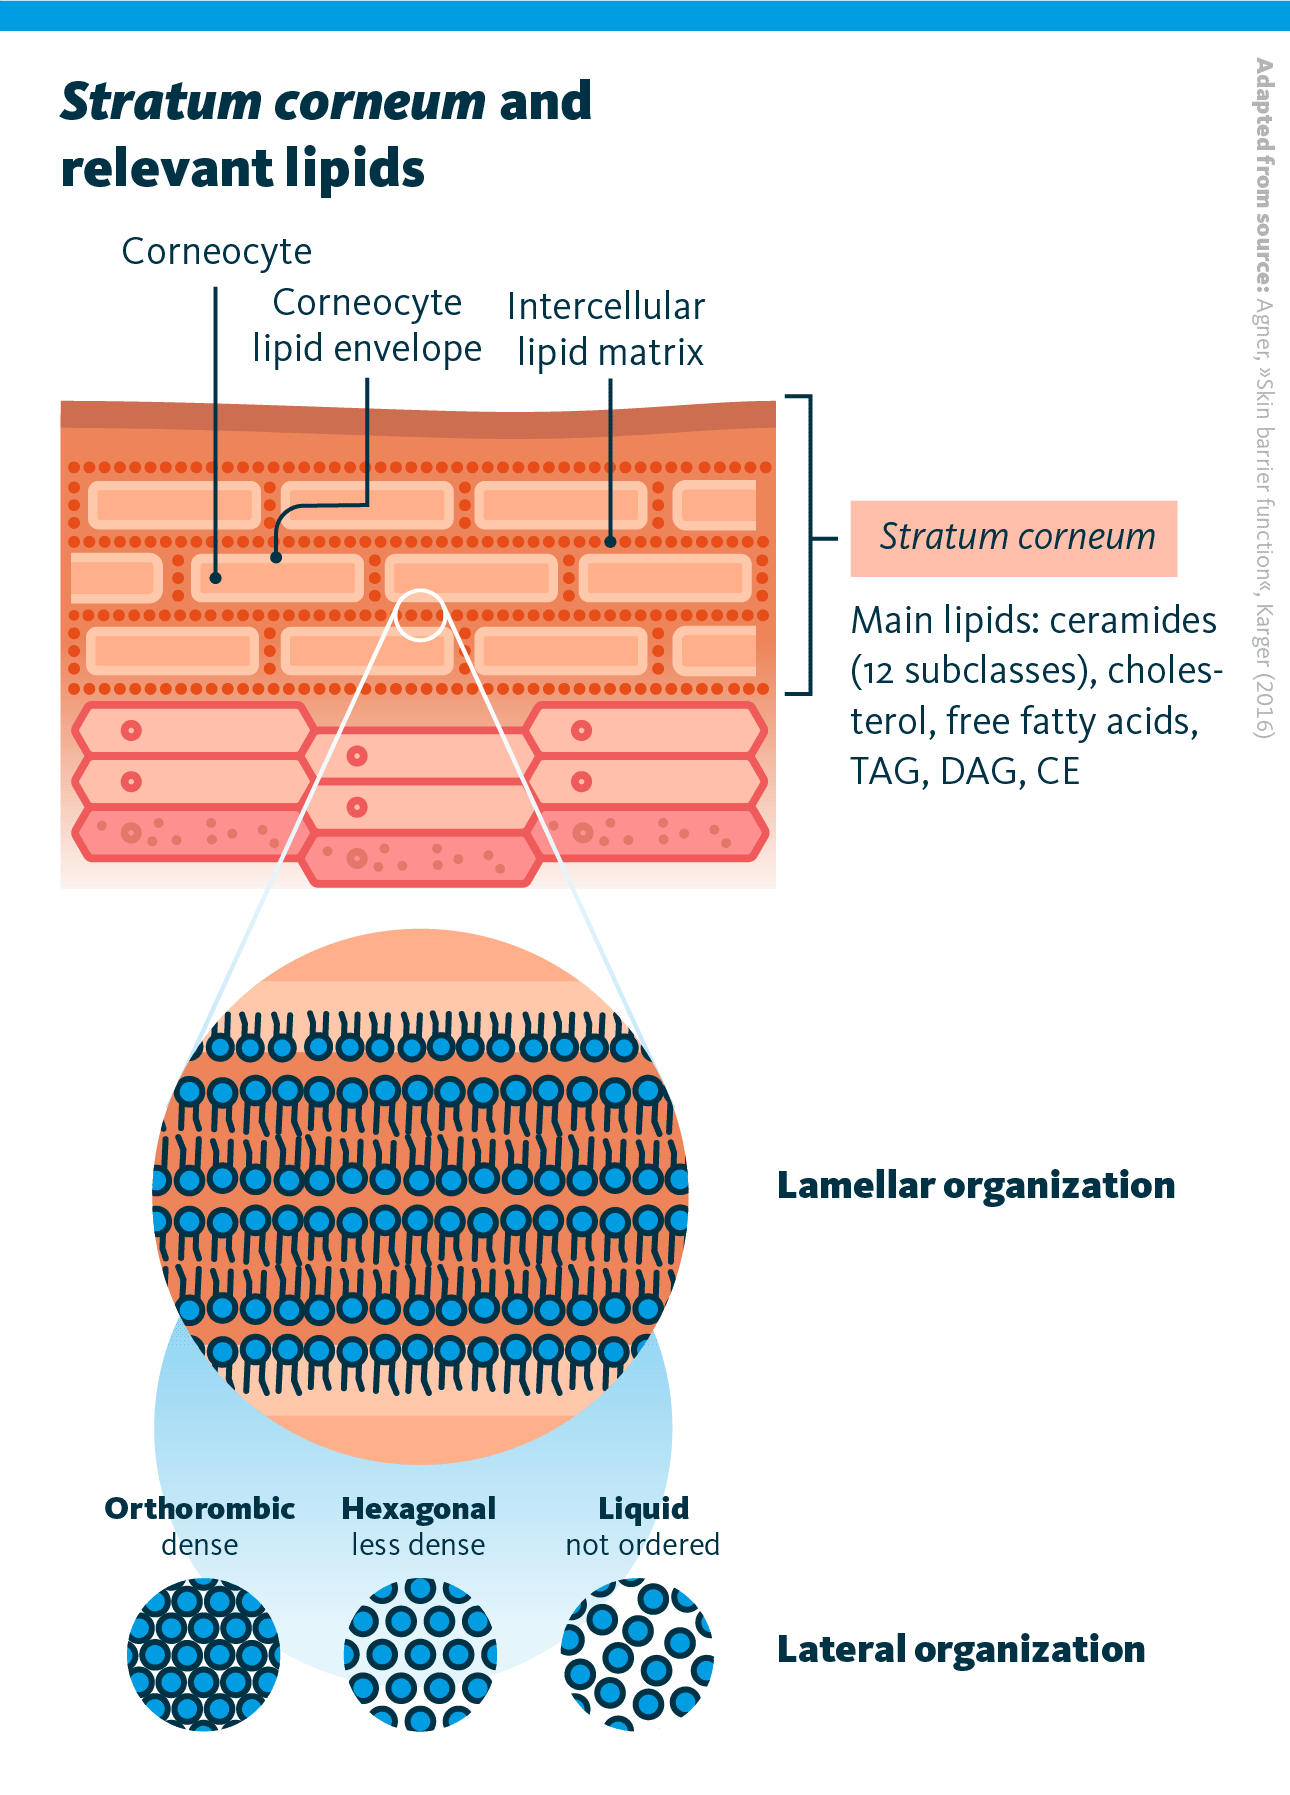 A schematic representation of stratum corneum and relevant lipids.